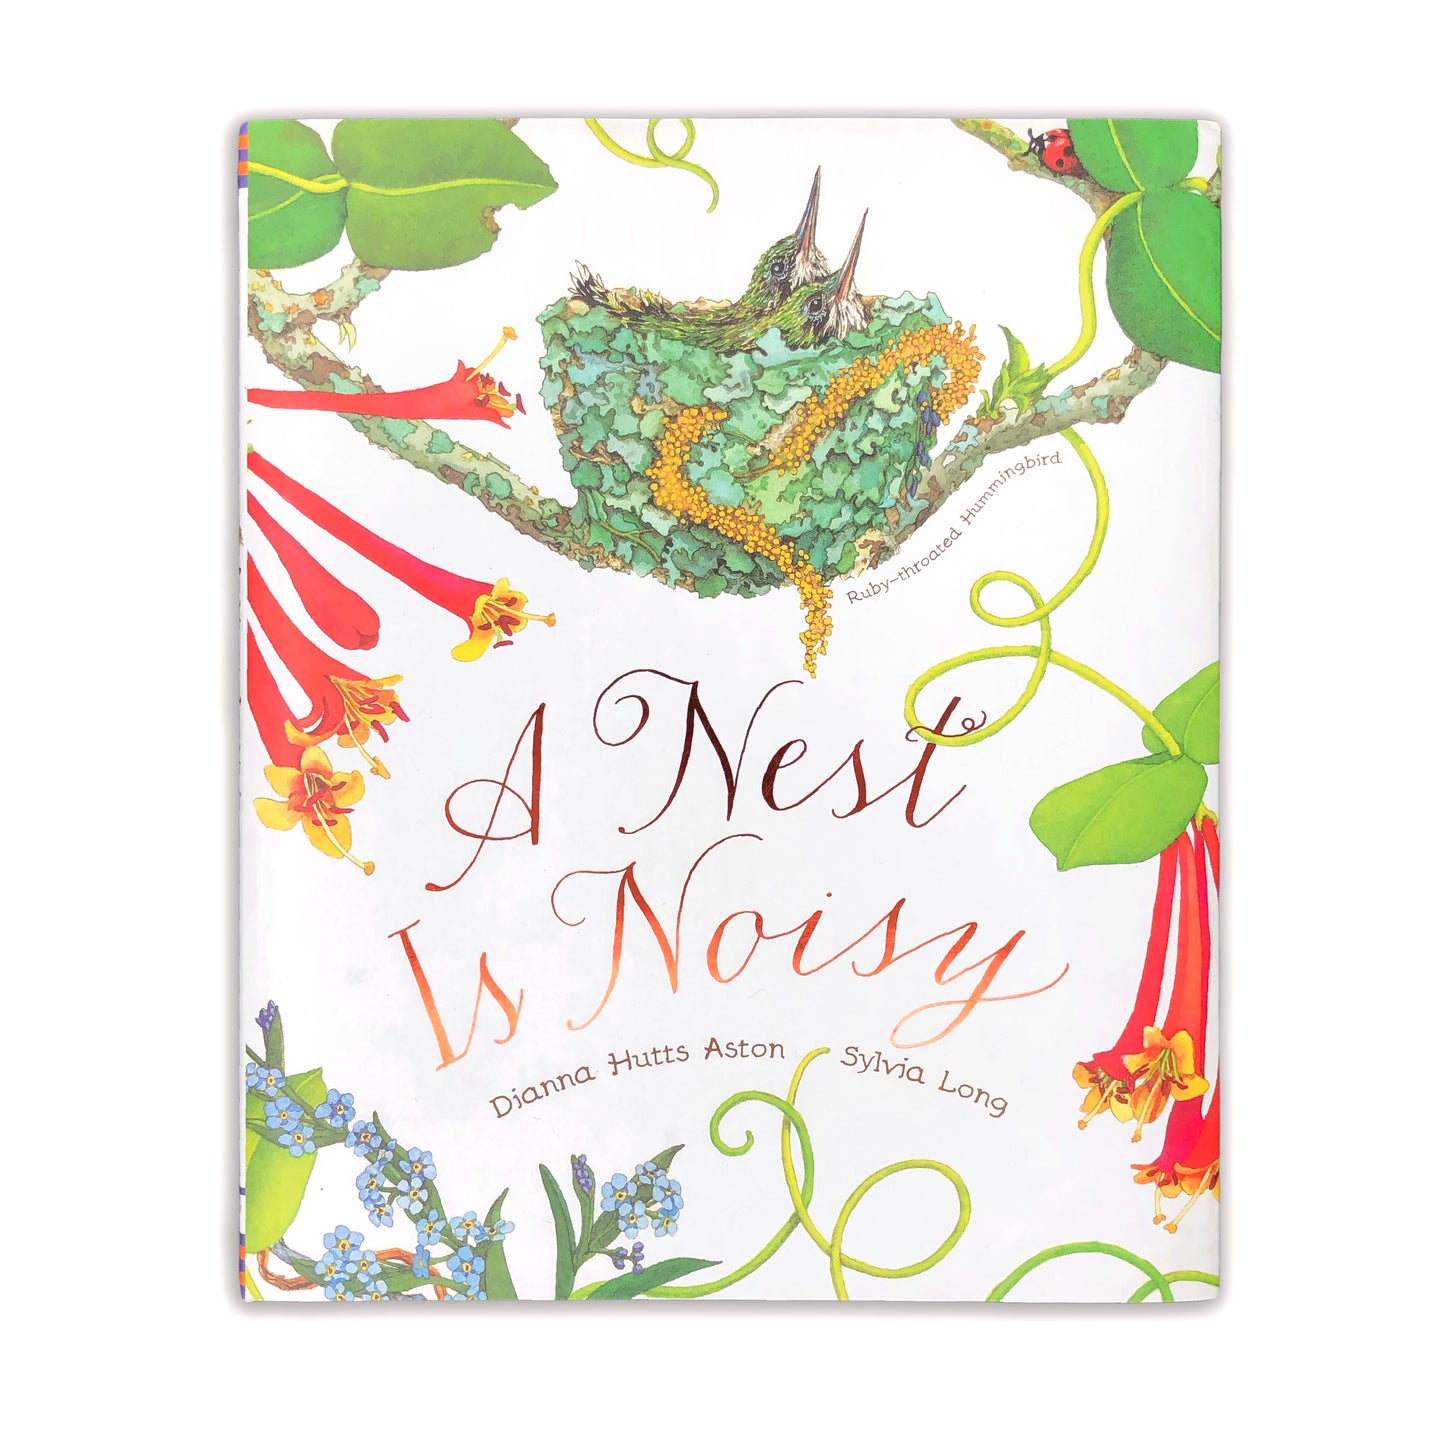 A Nest Is Noisy - Dianna Hutts Aston and Sylvia Long (hardcover)